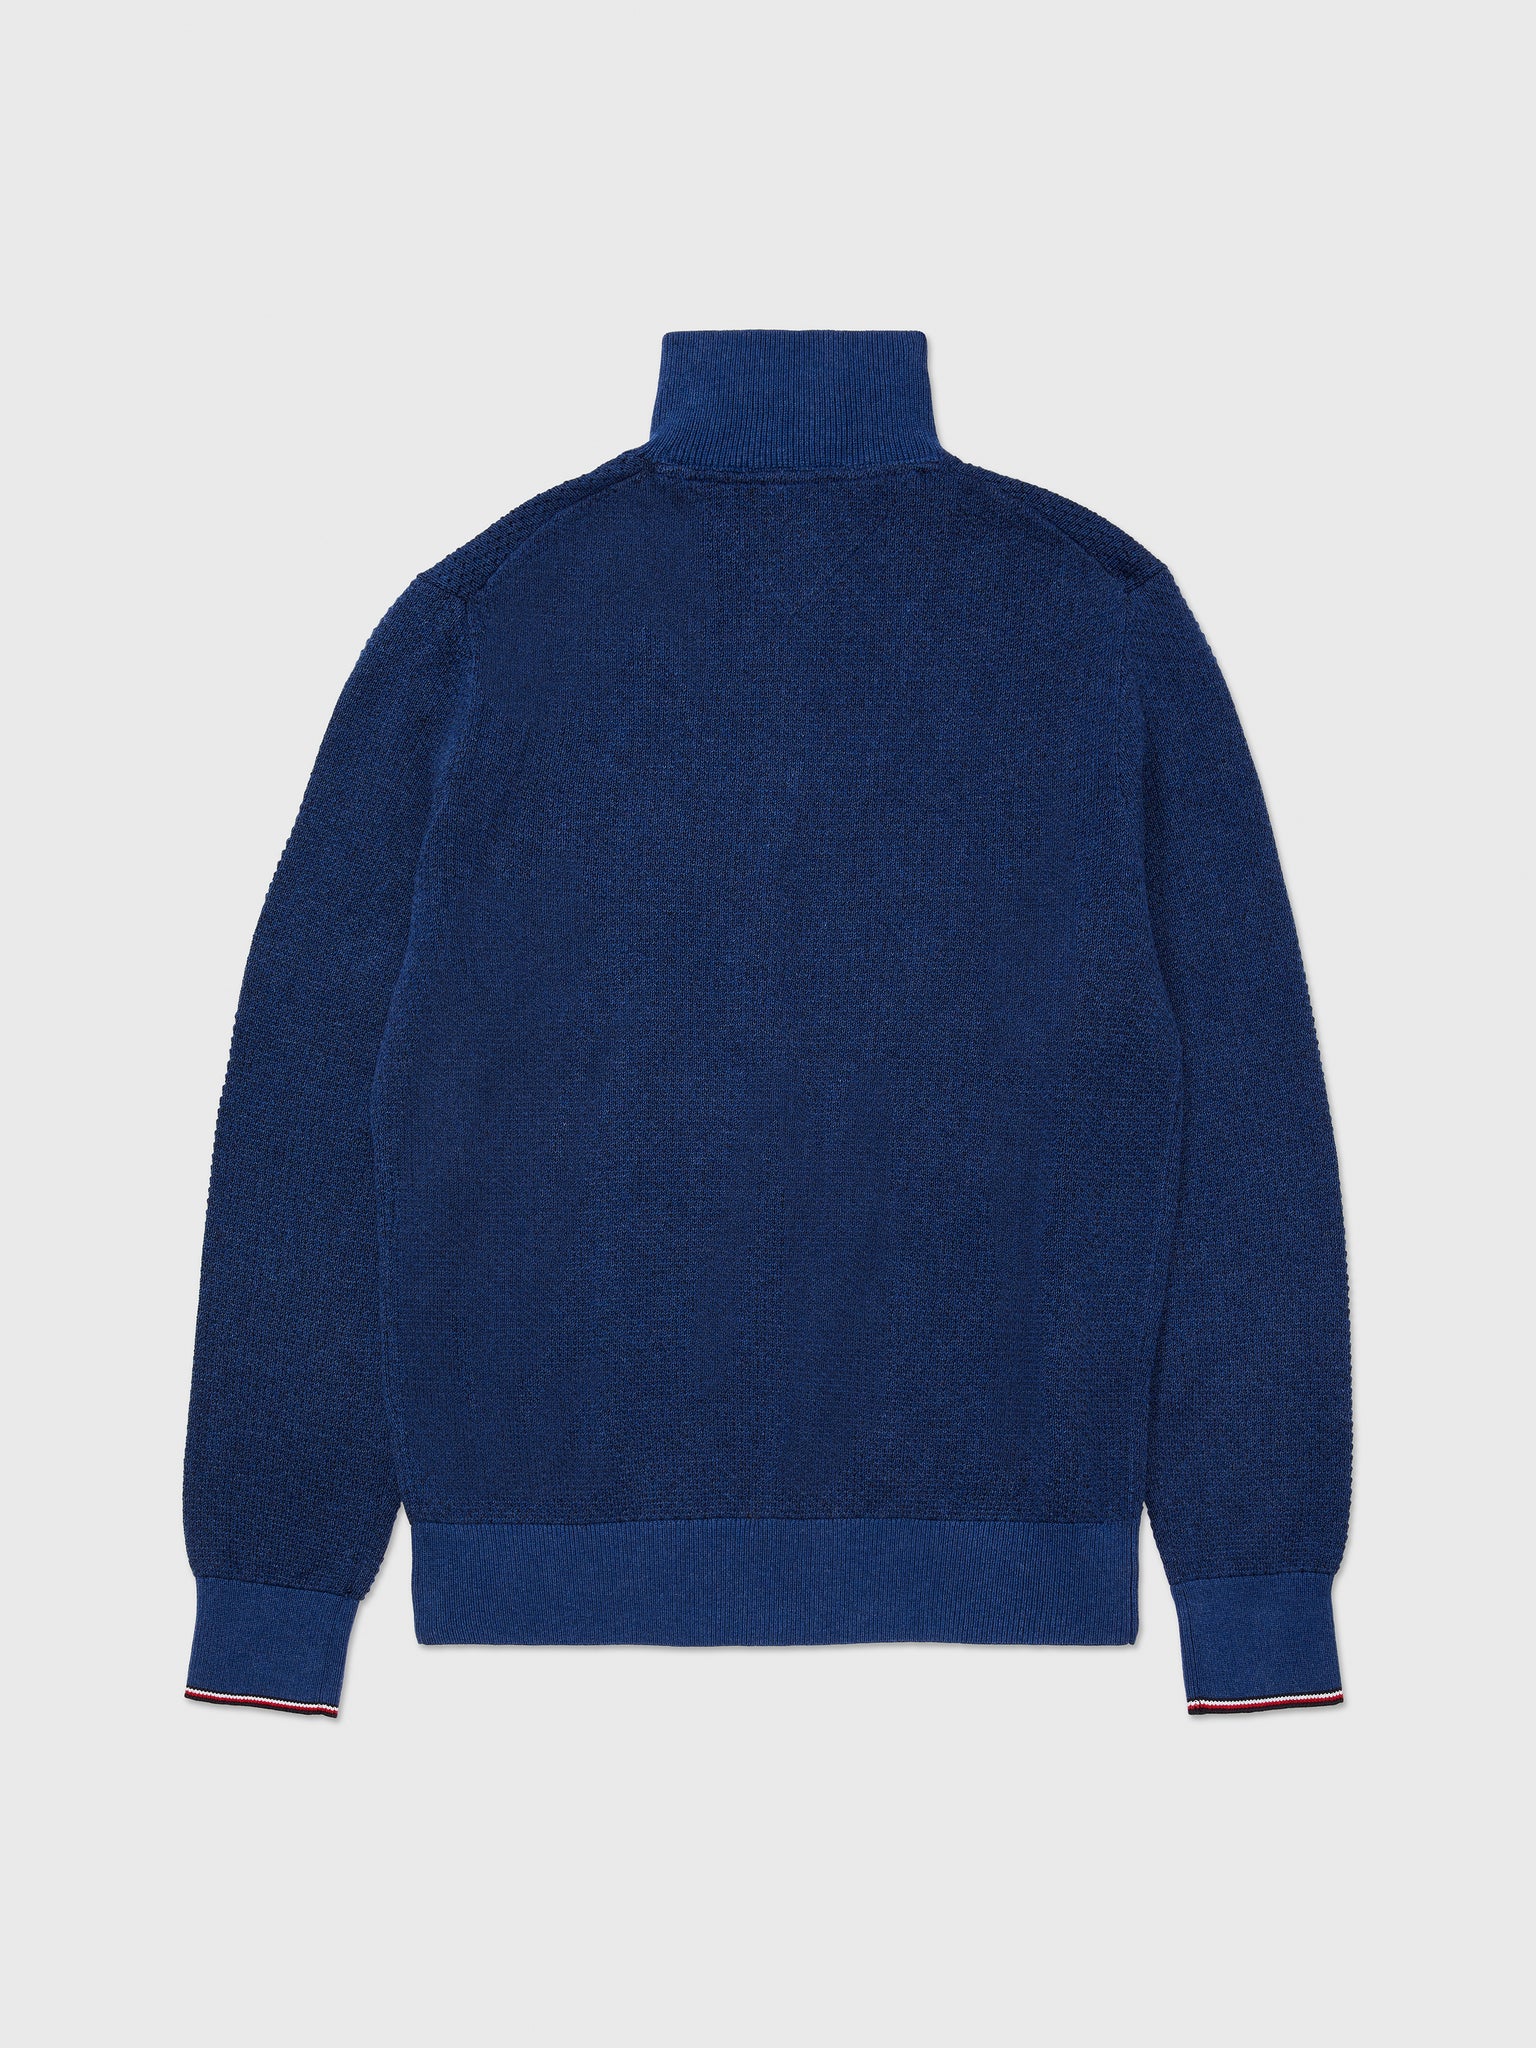 Manhanttan Quarter Zip Sweater (Mens) - Denim Heather